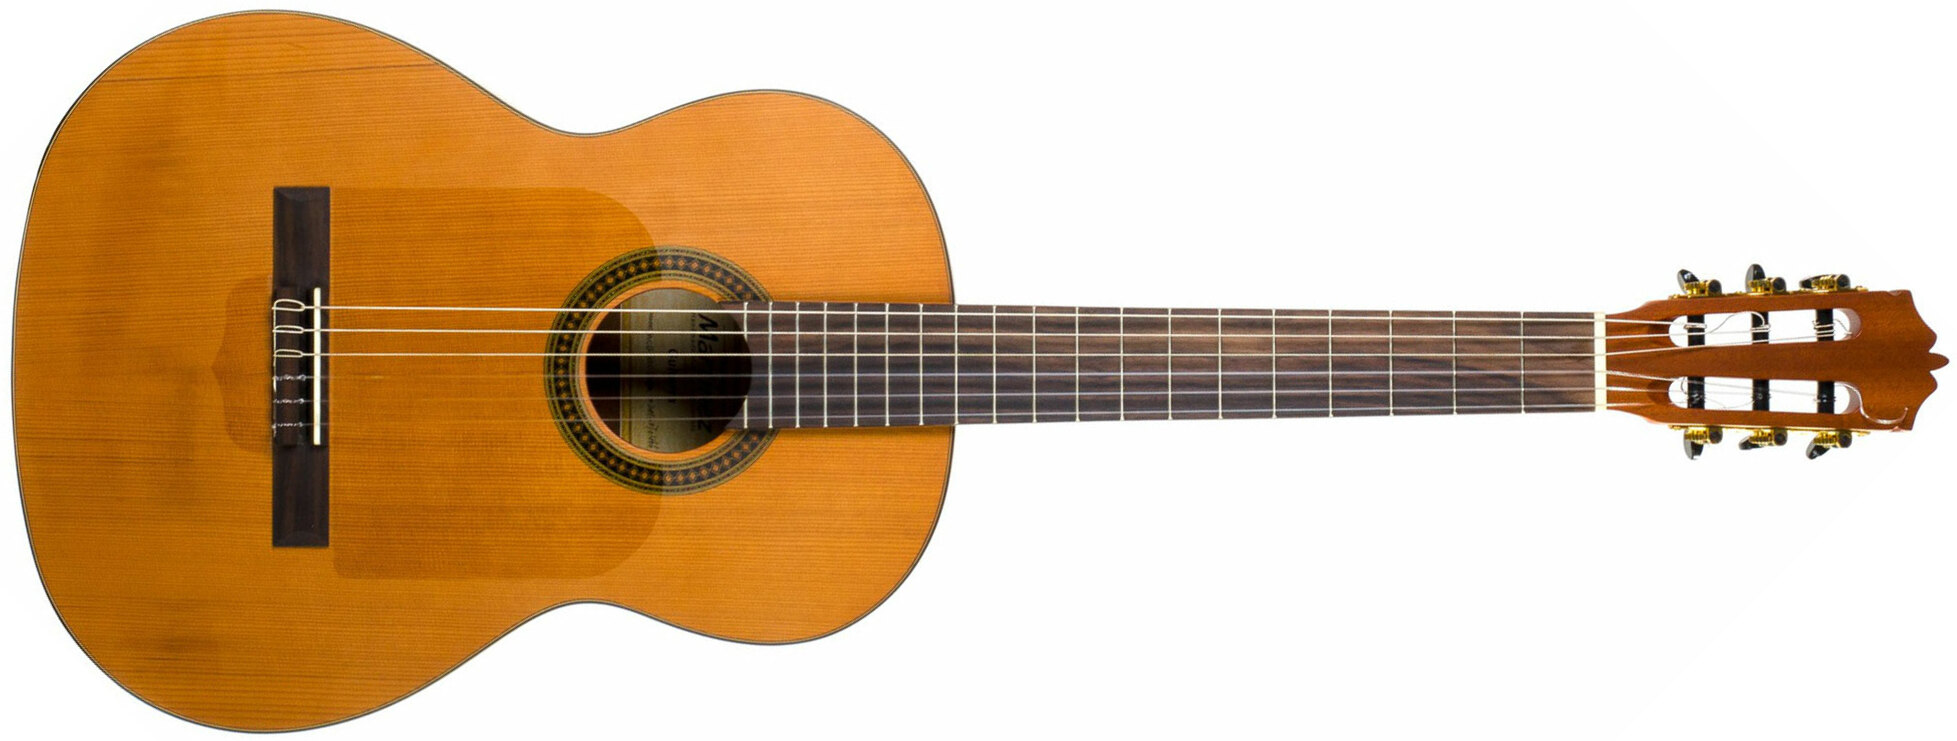 Martinez Mc-35c Cedre Sapele Rw - Natural Satin - Klassieke gitaar 4/4 - Main picture